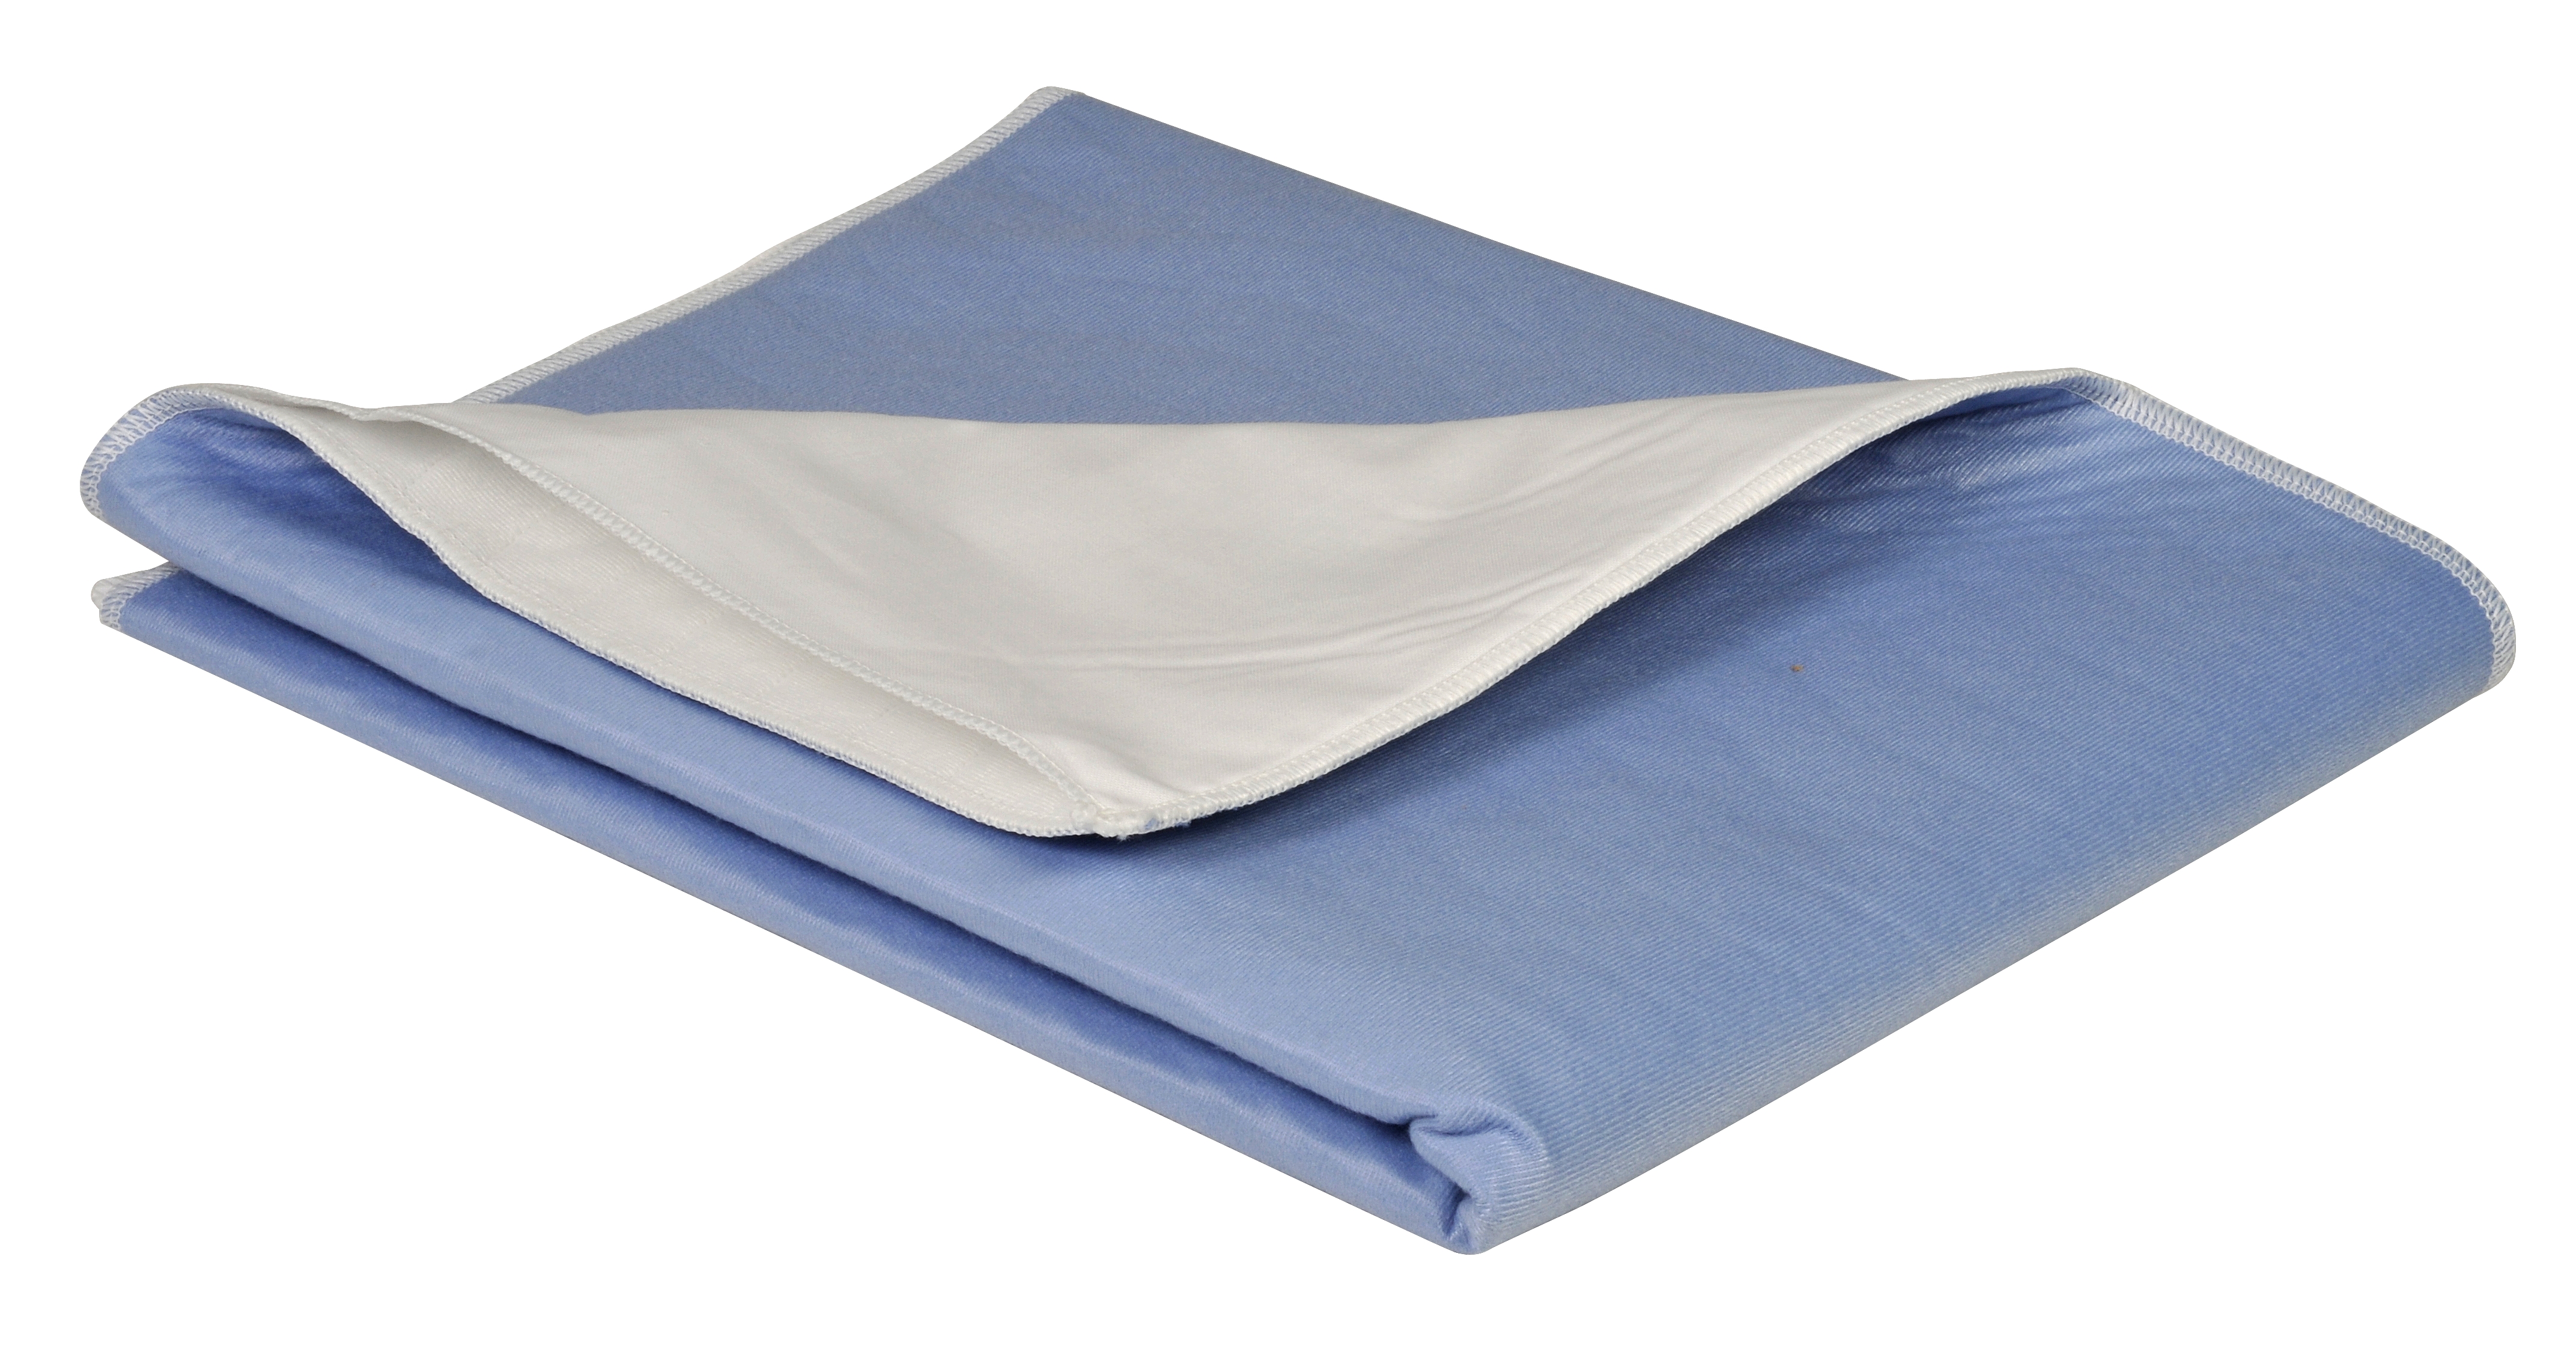 Abri Soft, textilní podložka 75x85 cm se záložkami, savost 2000ml, pratelná